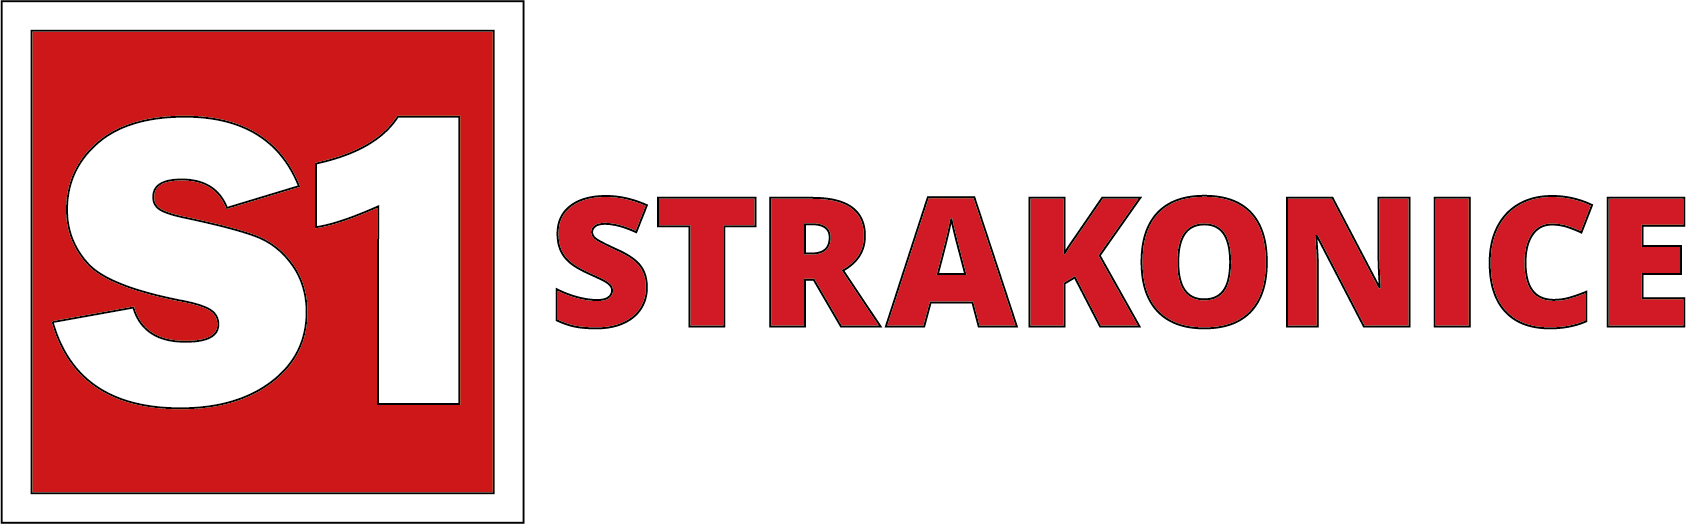 S1 Strakonice Logo